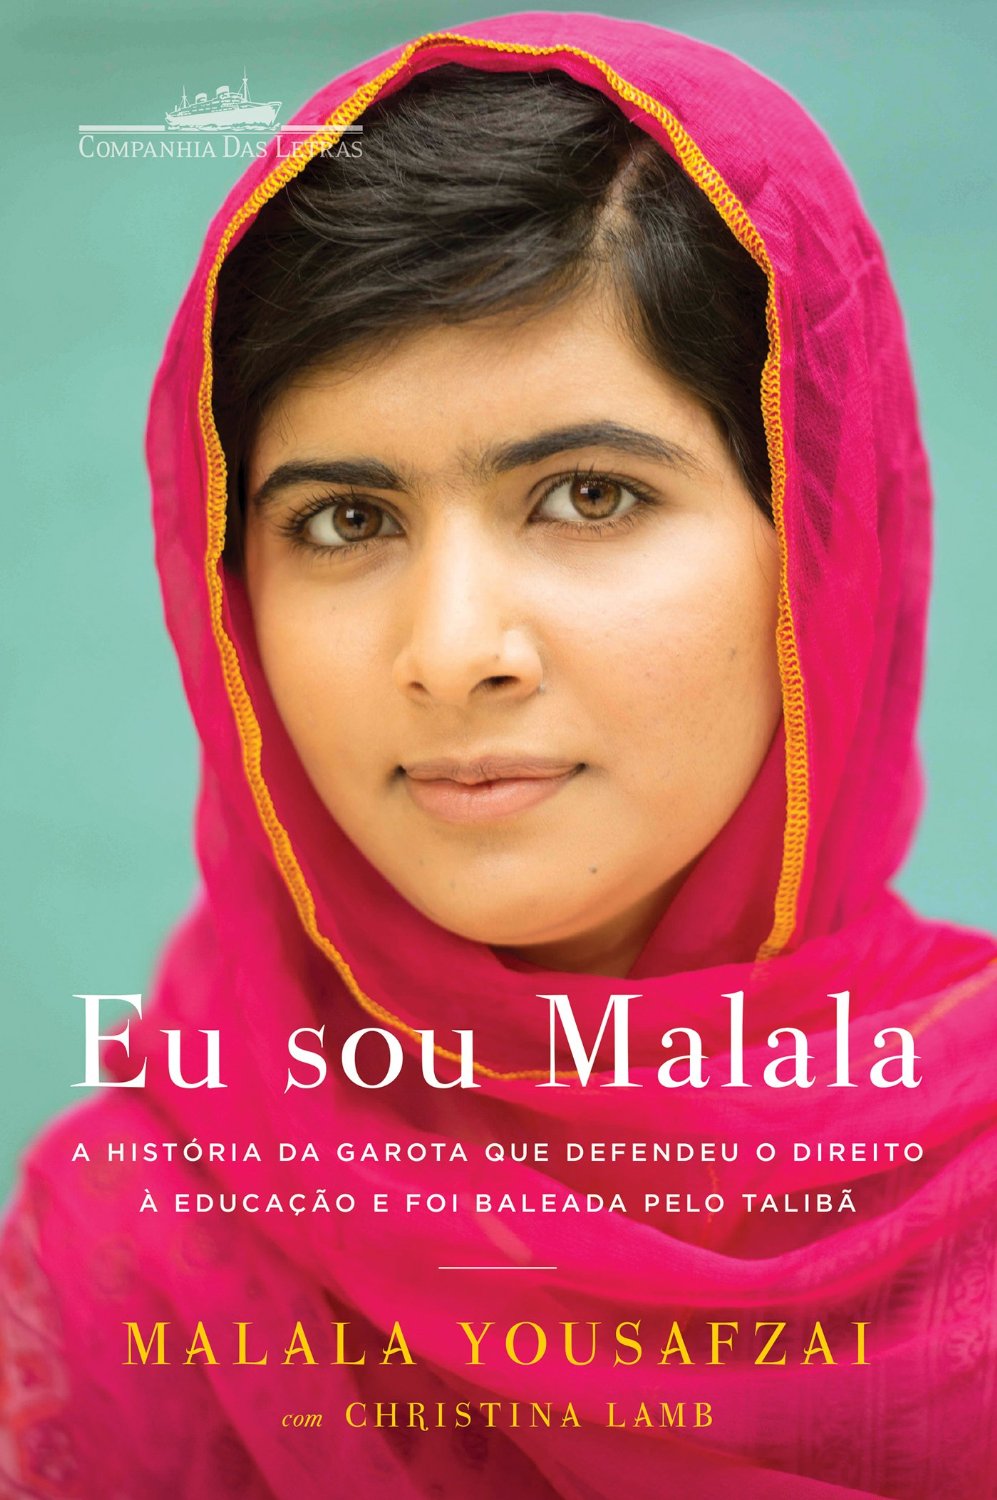 Eu sou Malala - Malala Yousafzai | #Terminei - Crentassos ...